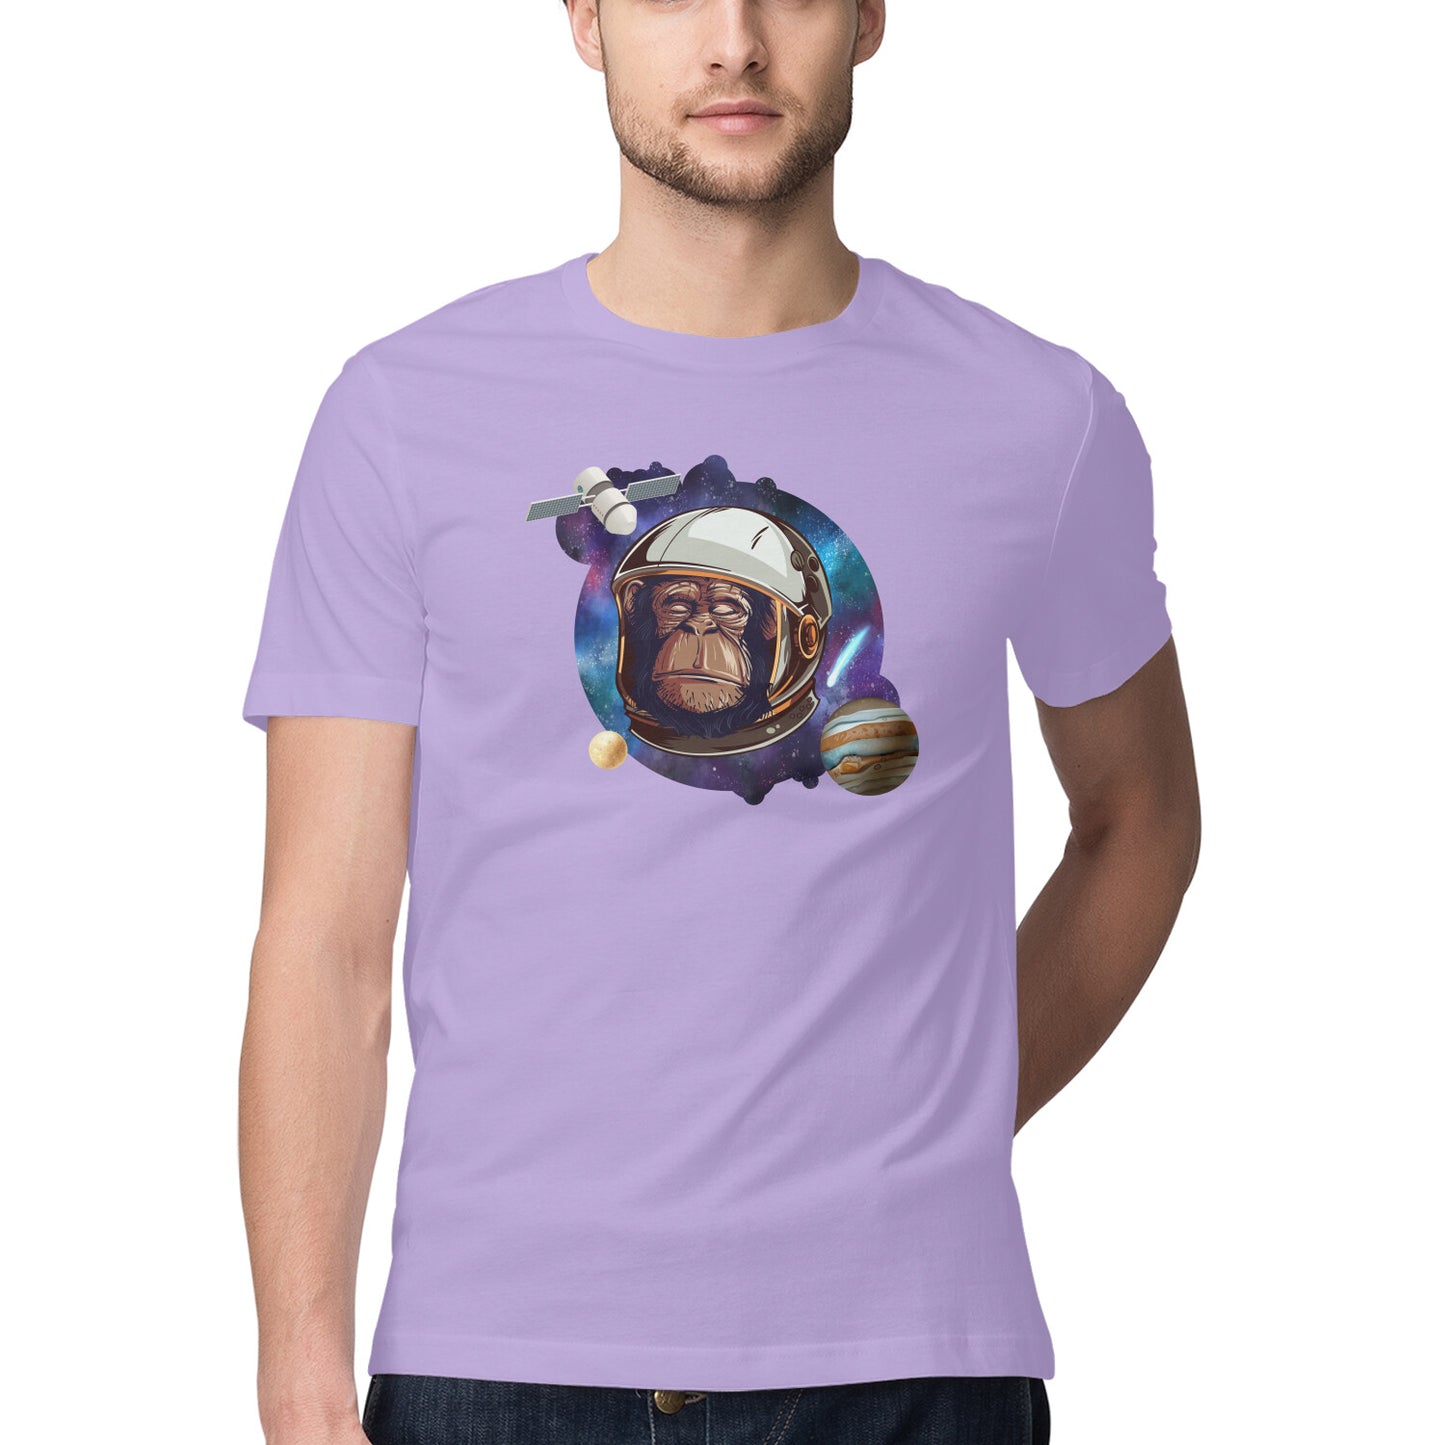 Chimp Astronaut Printed T-Shirt